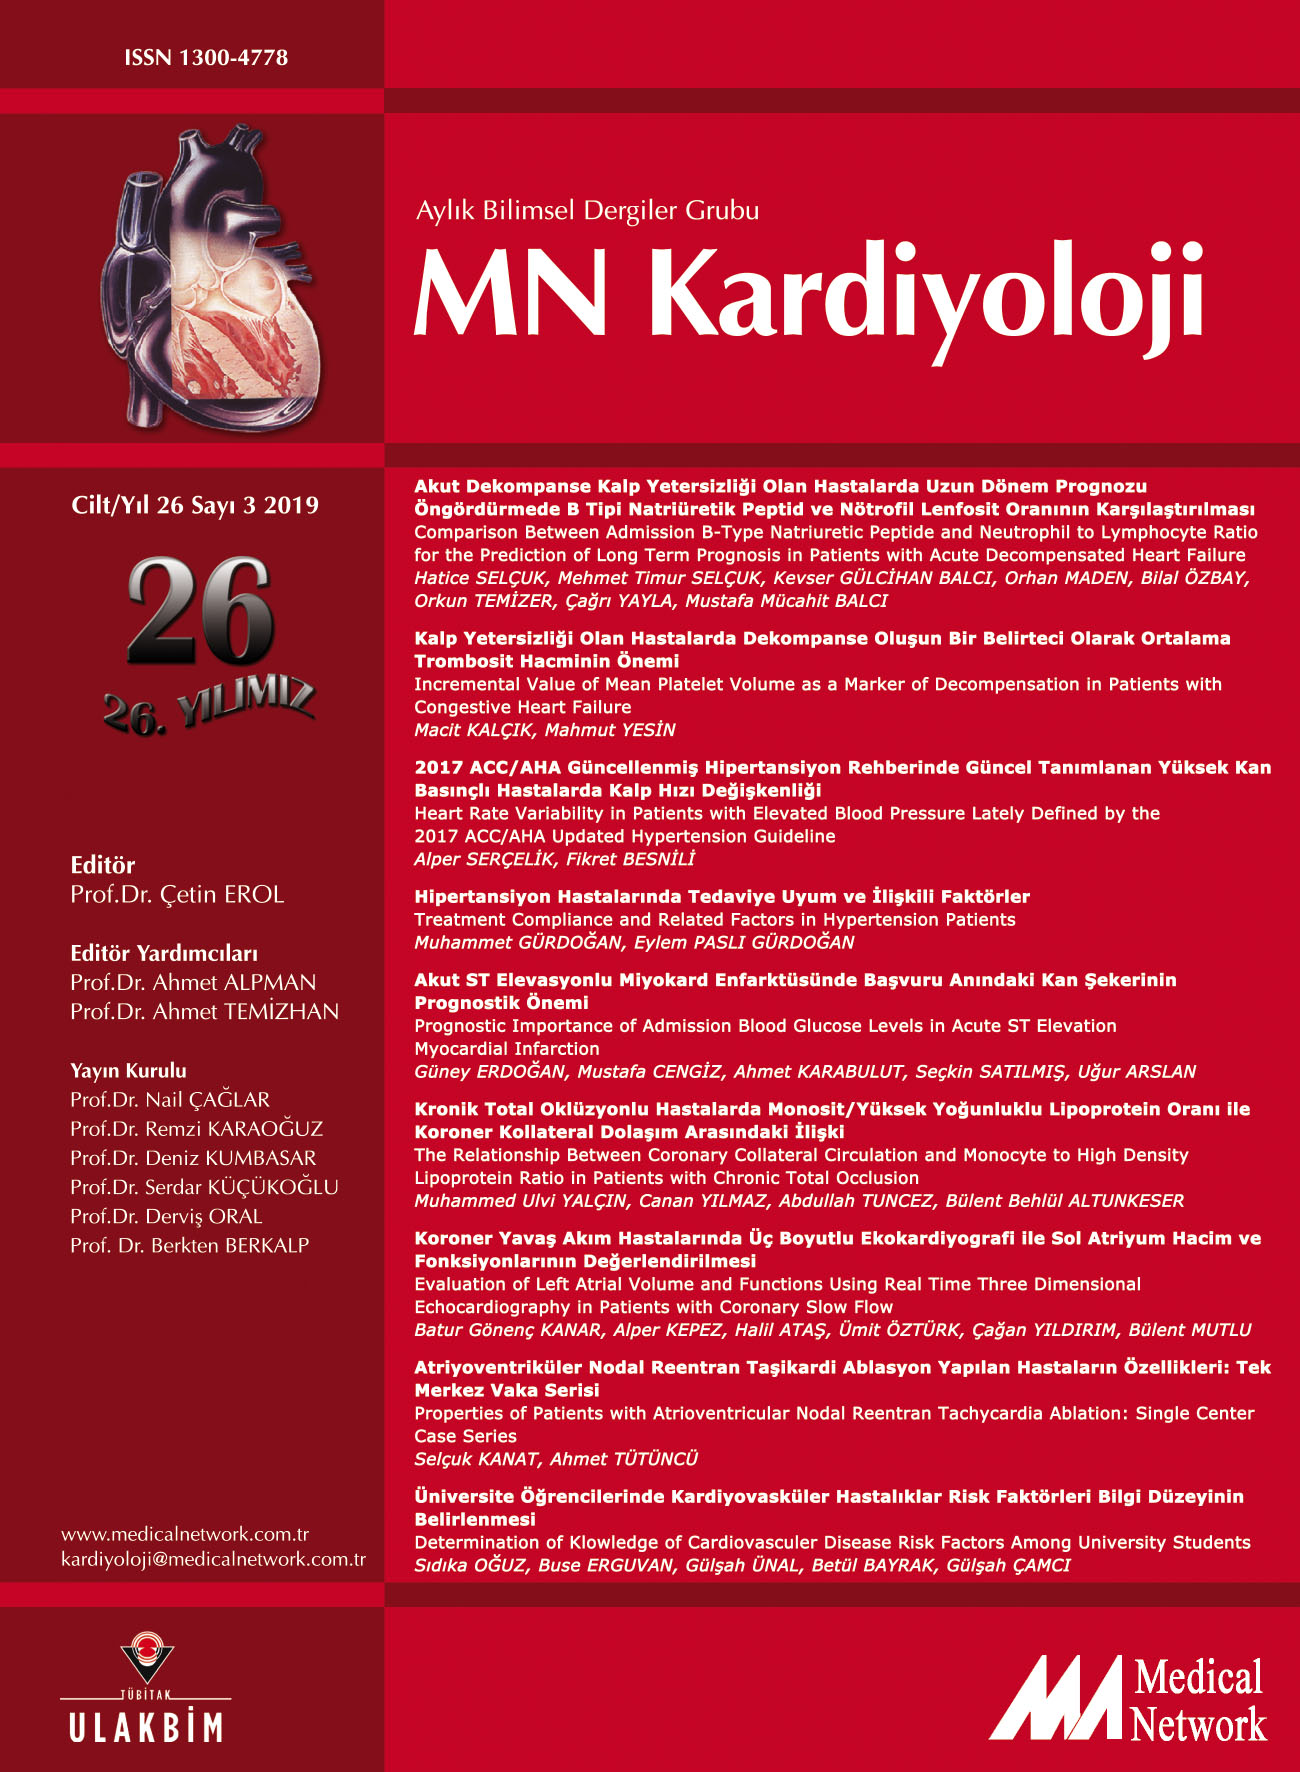 <p>MN Kardiyoloji Cilt: 26 Sayı: 3 2019 MN Cardiology Volume: 26 No: 3 2019</p>